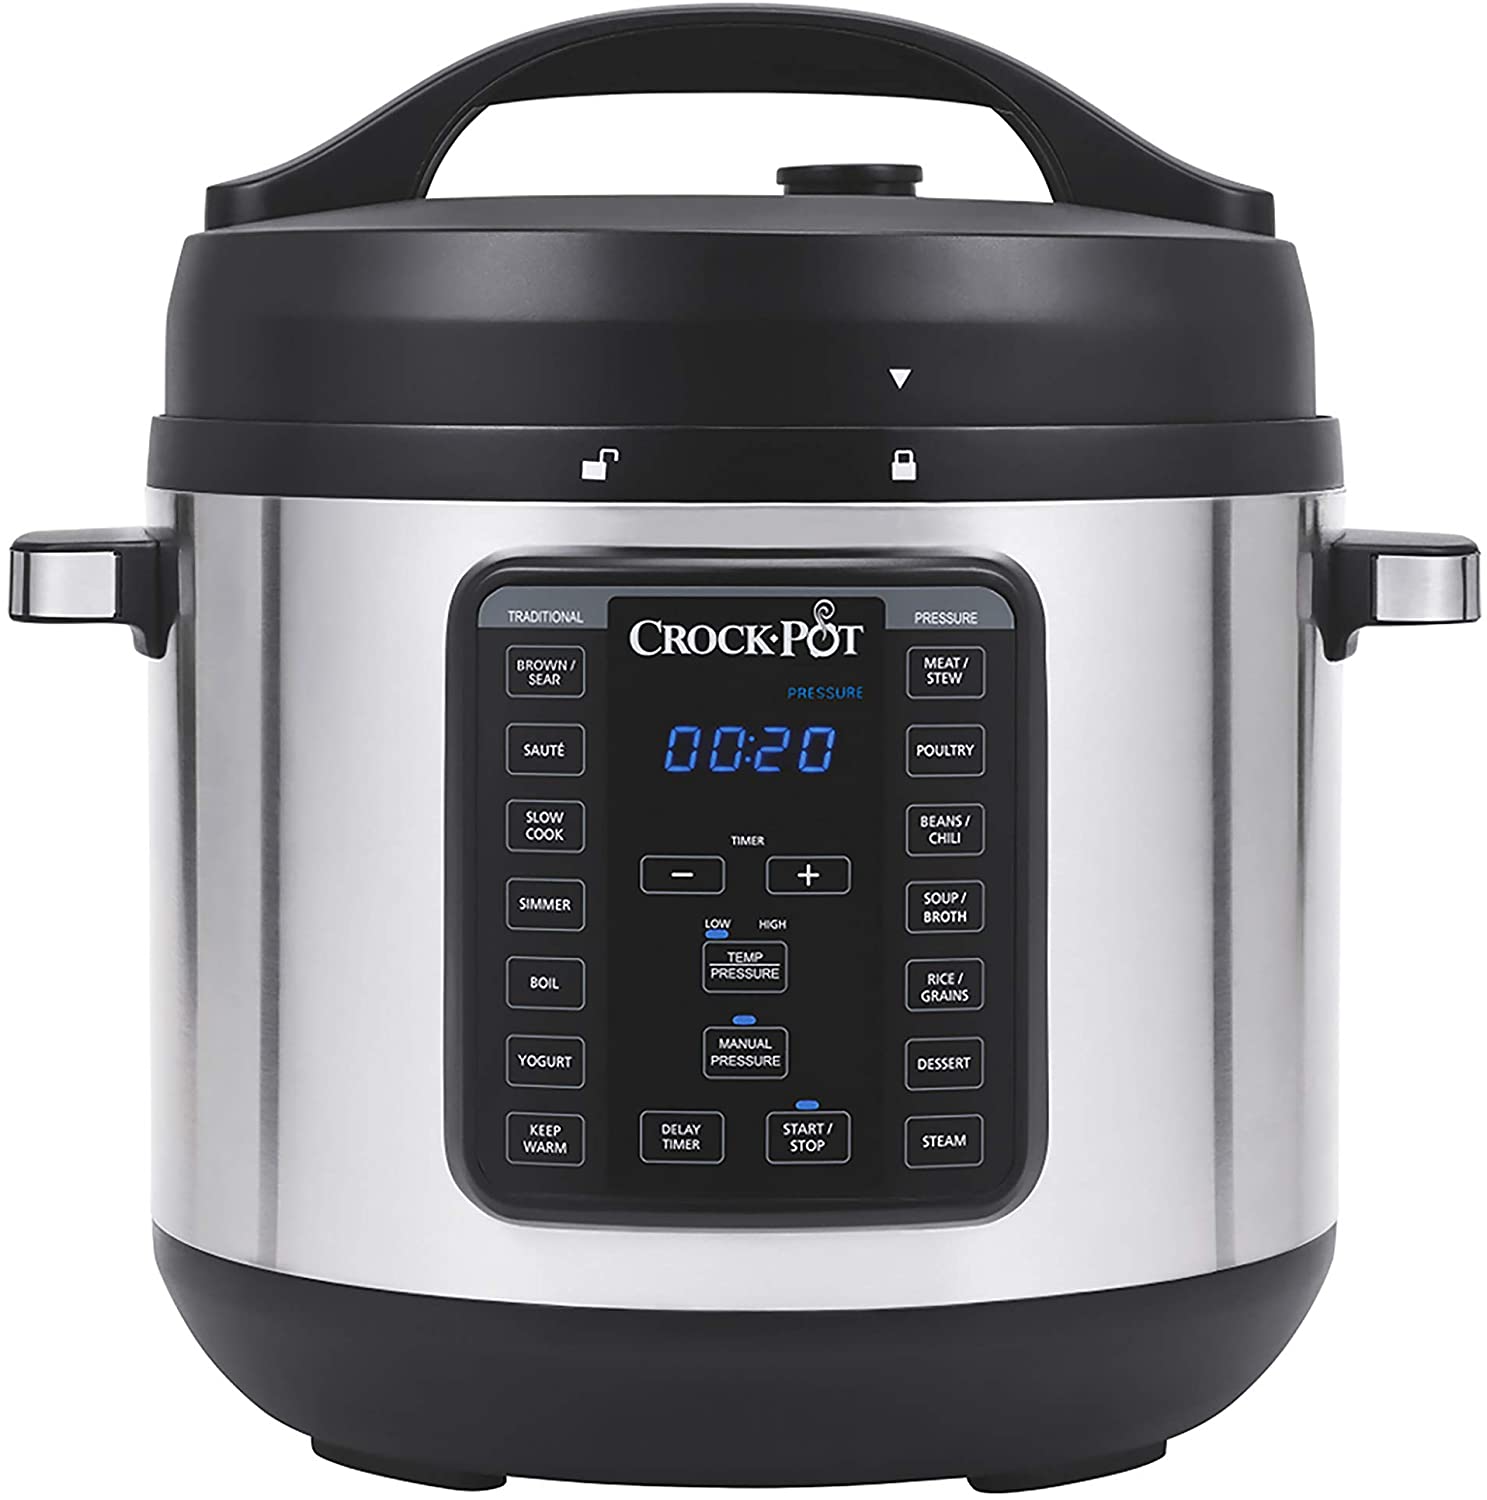 Crock-Pot Family Sized Pressure Cooker, 8-Quart